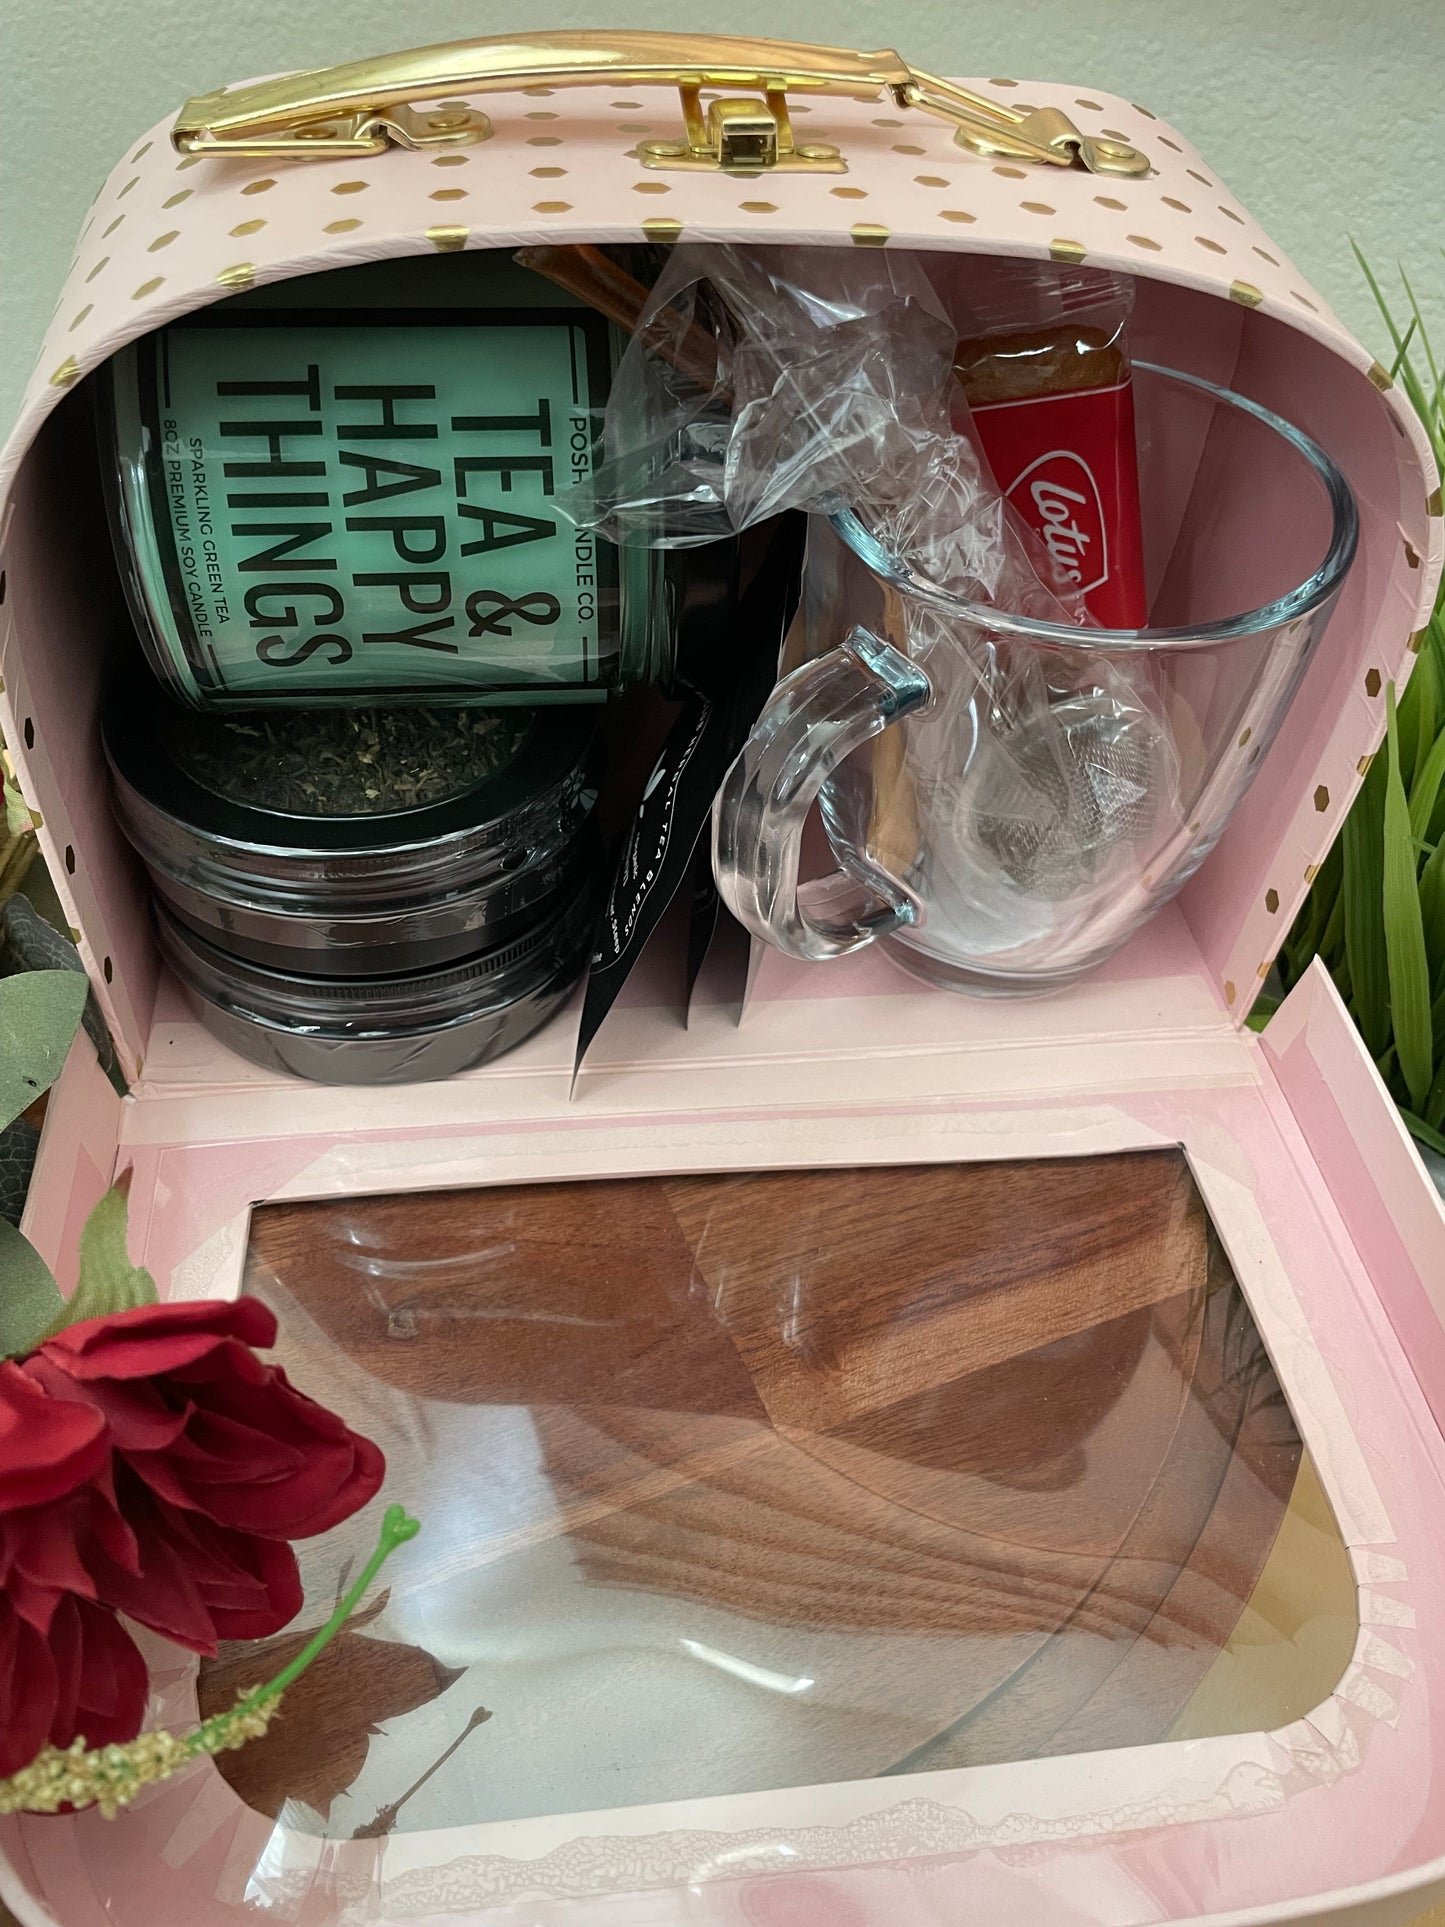 Tea Tasting Kit in a Box